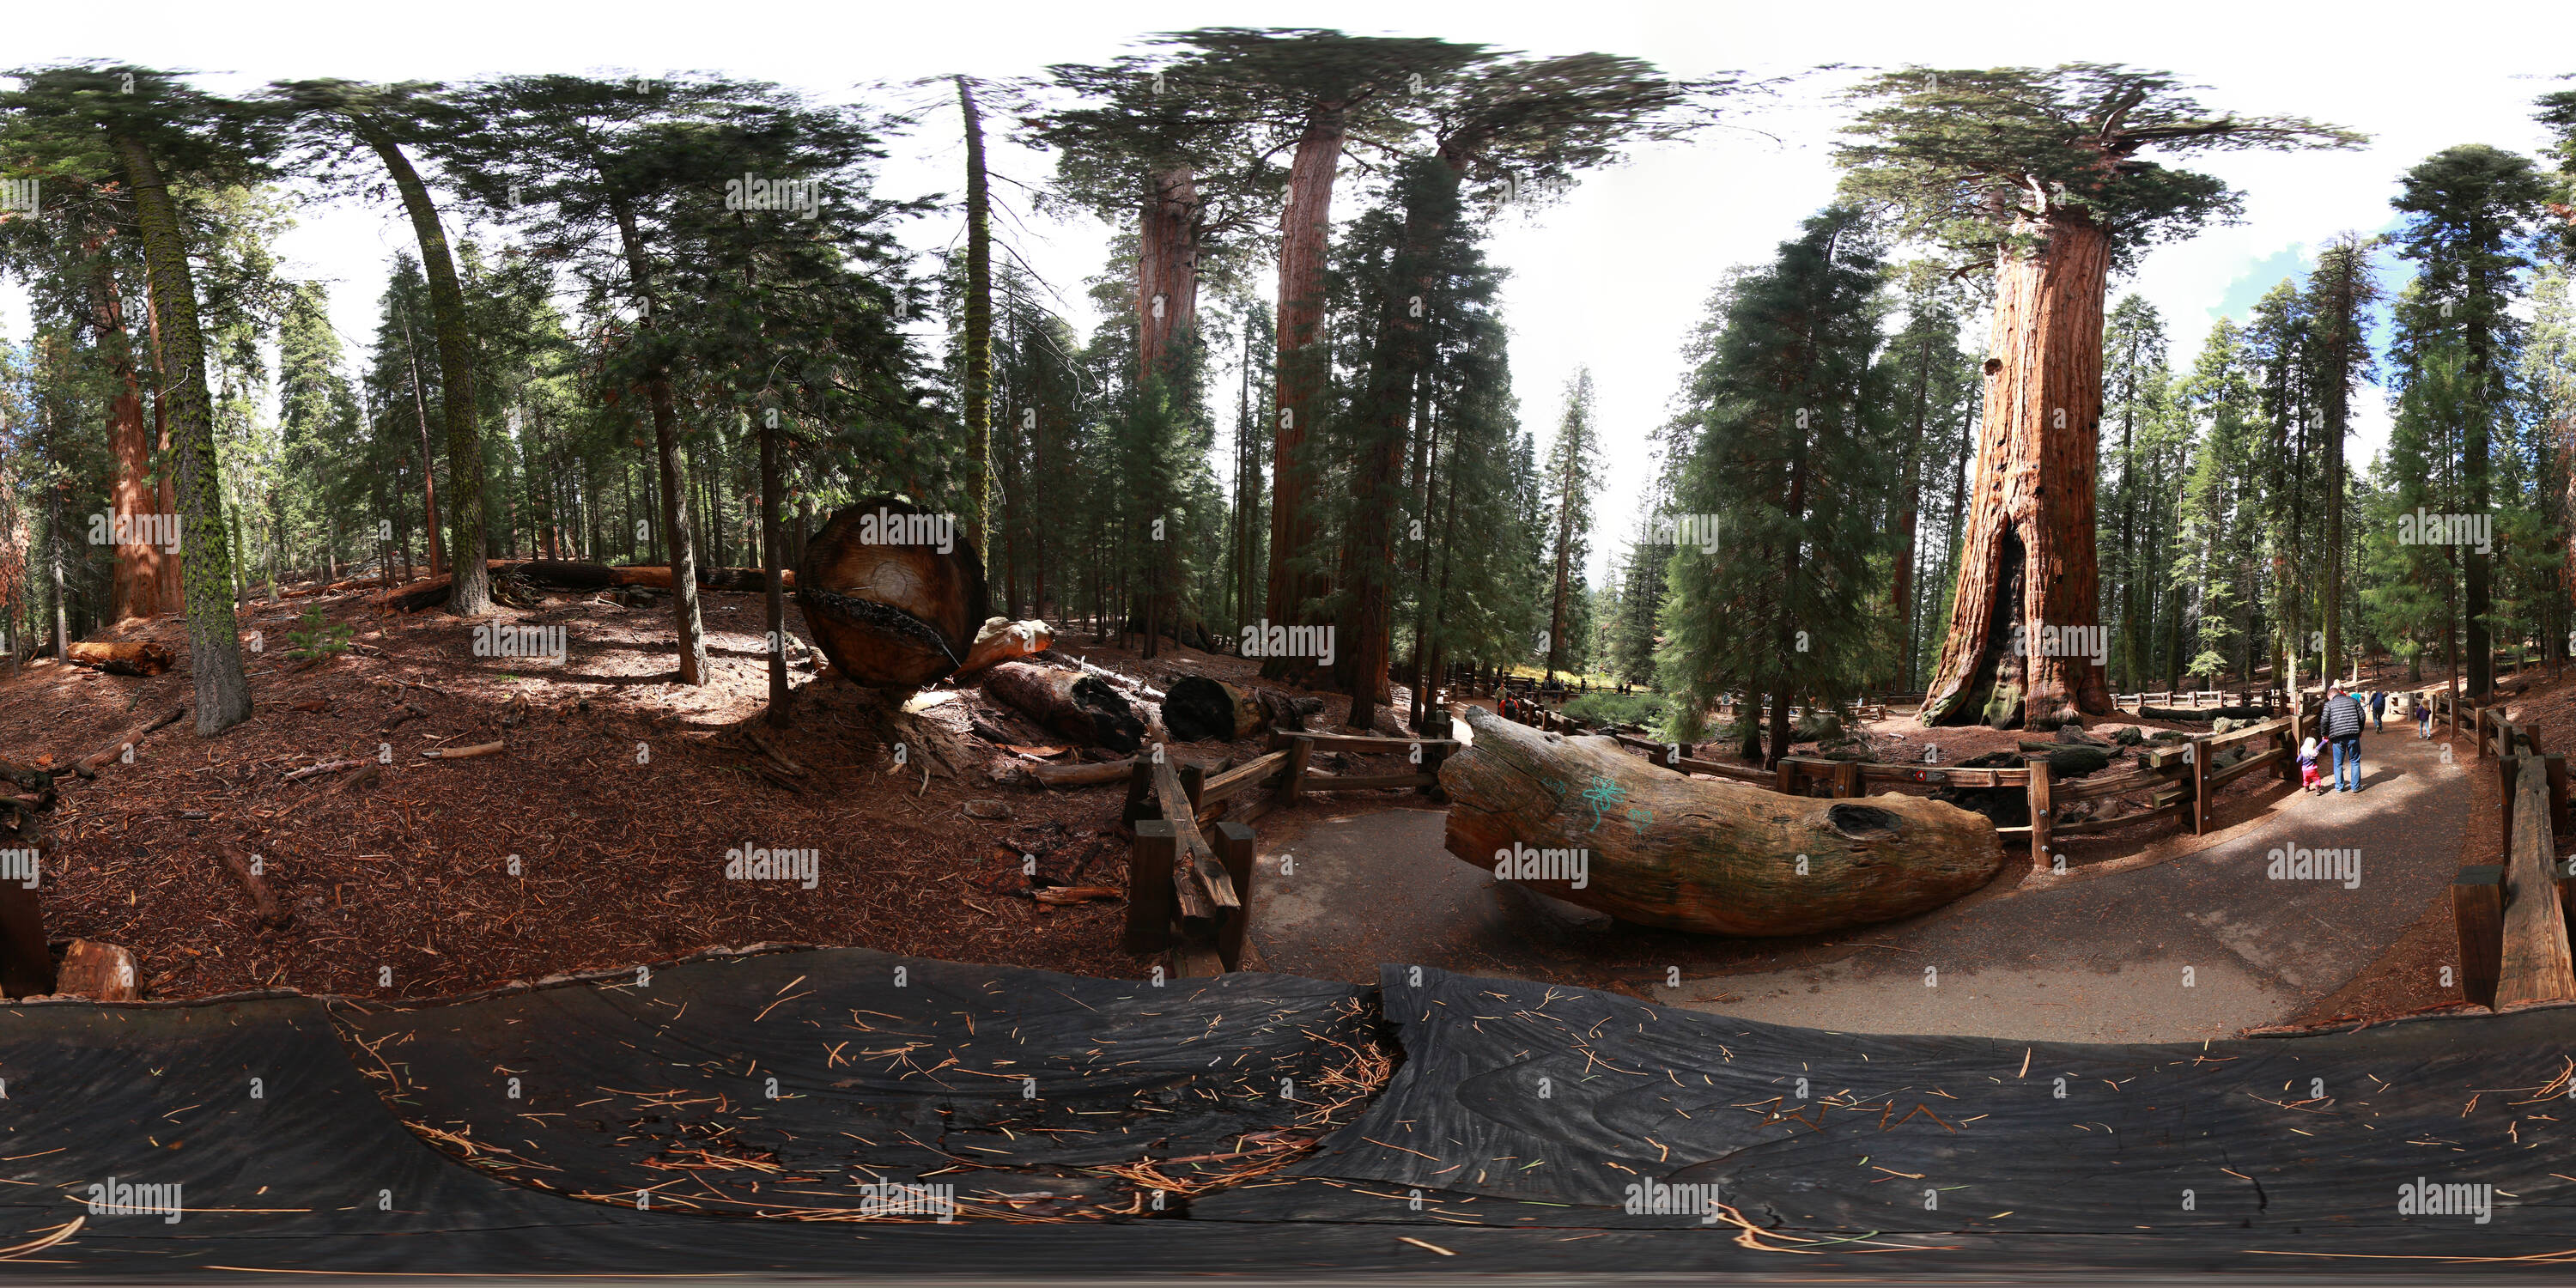 360 degree panoramic view of General Sherman's stump speech